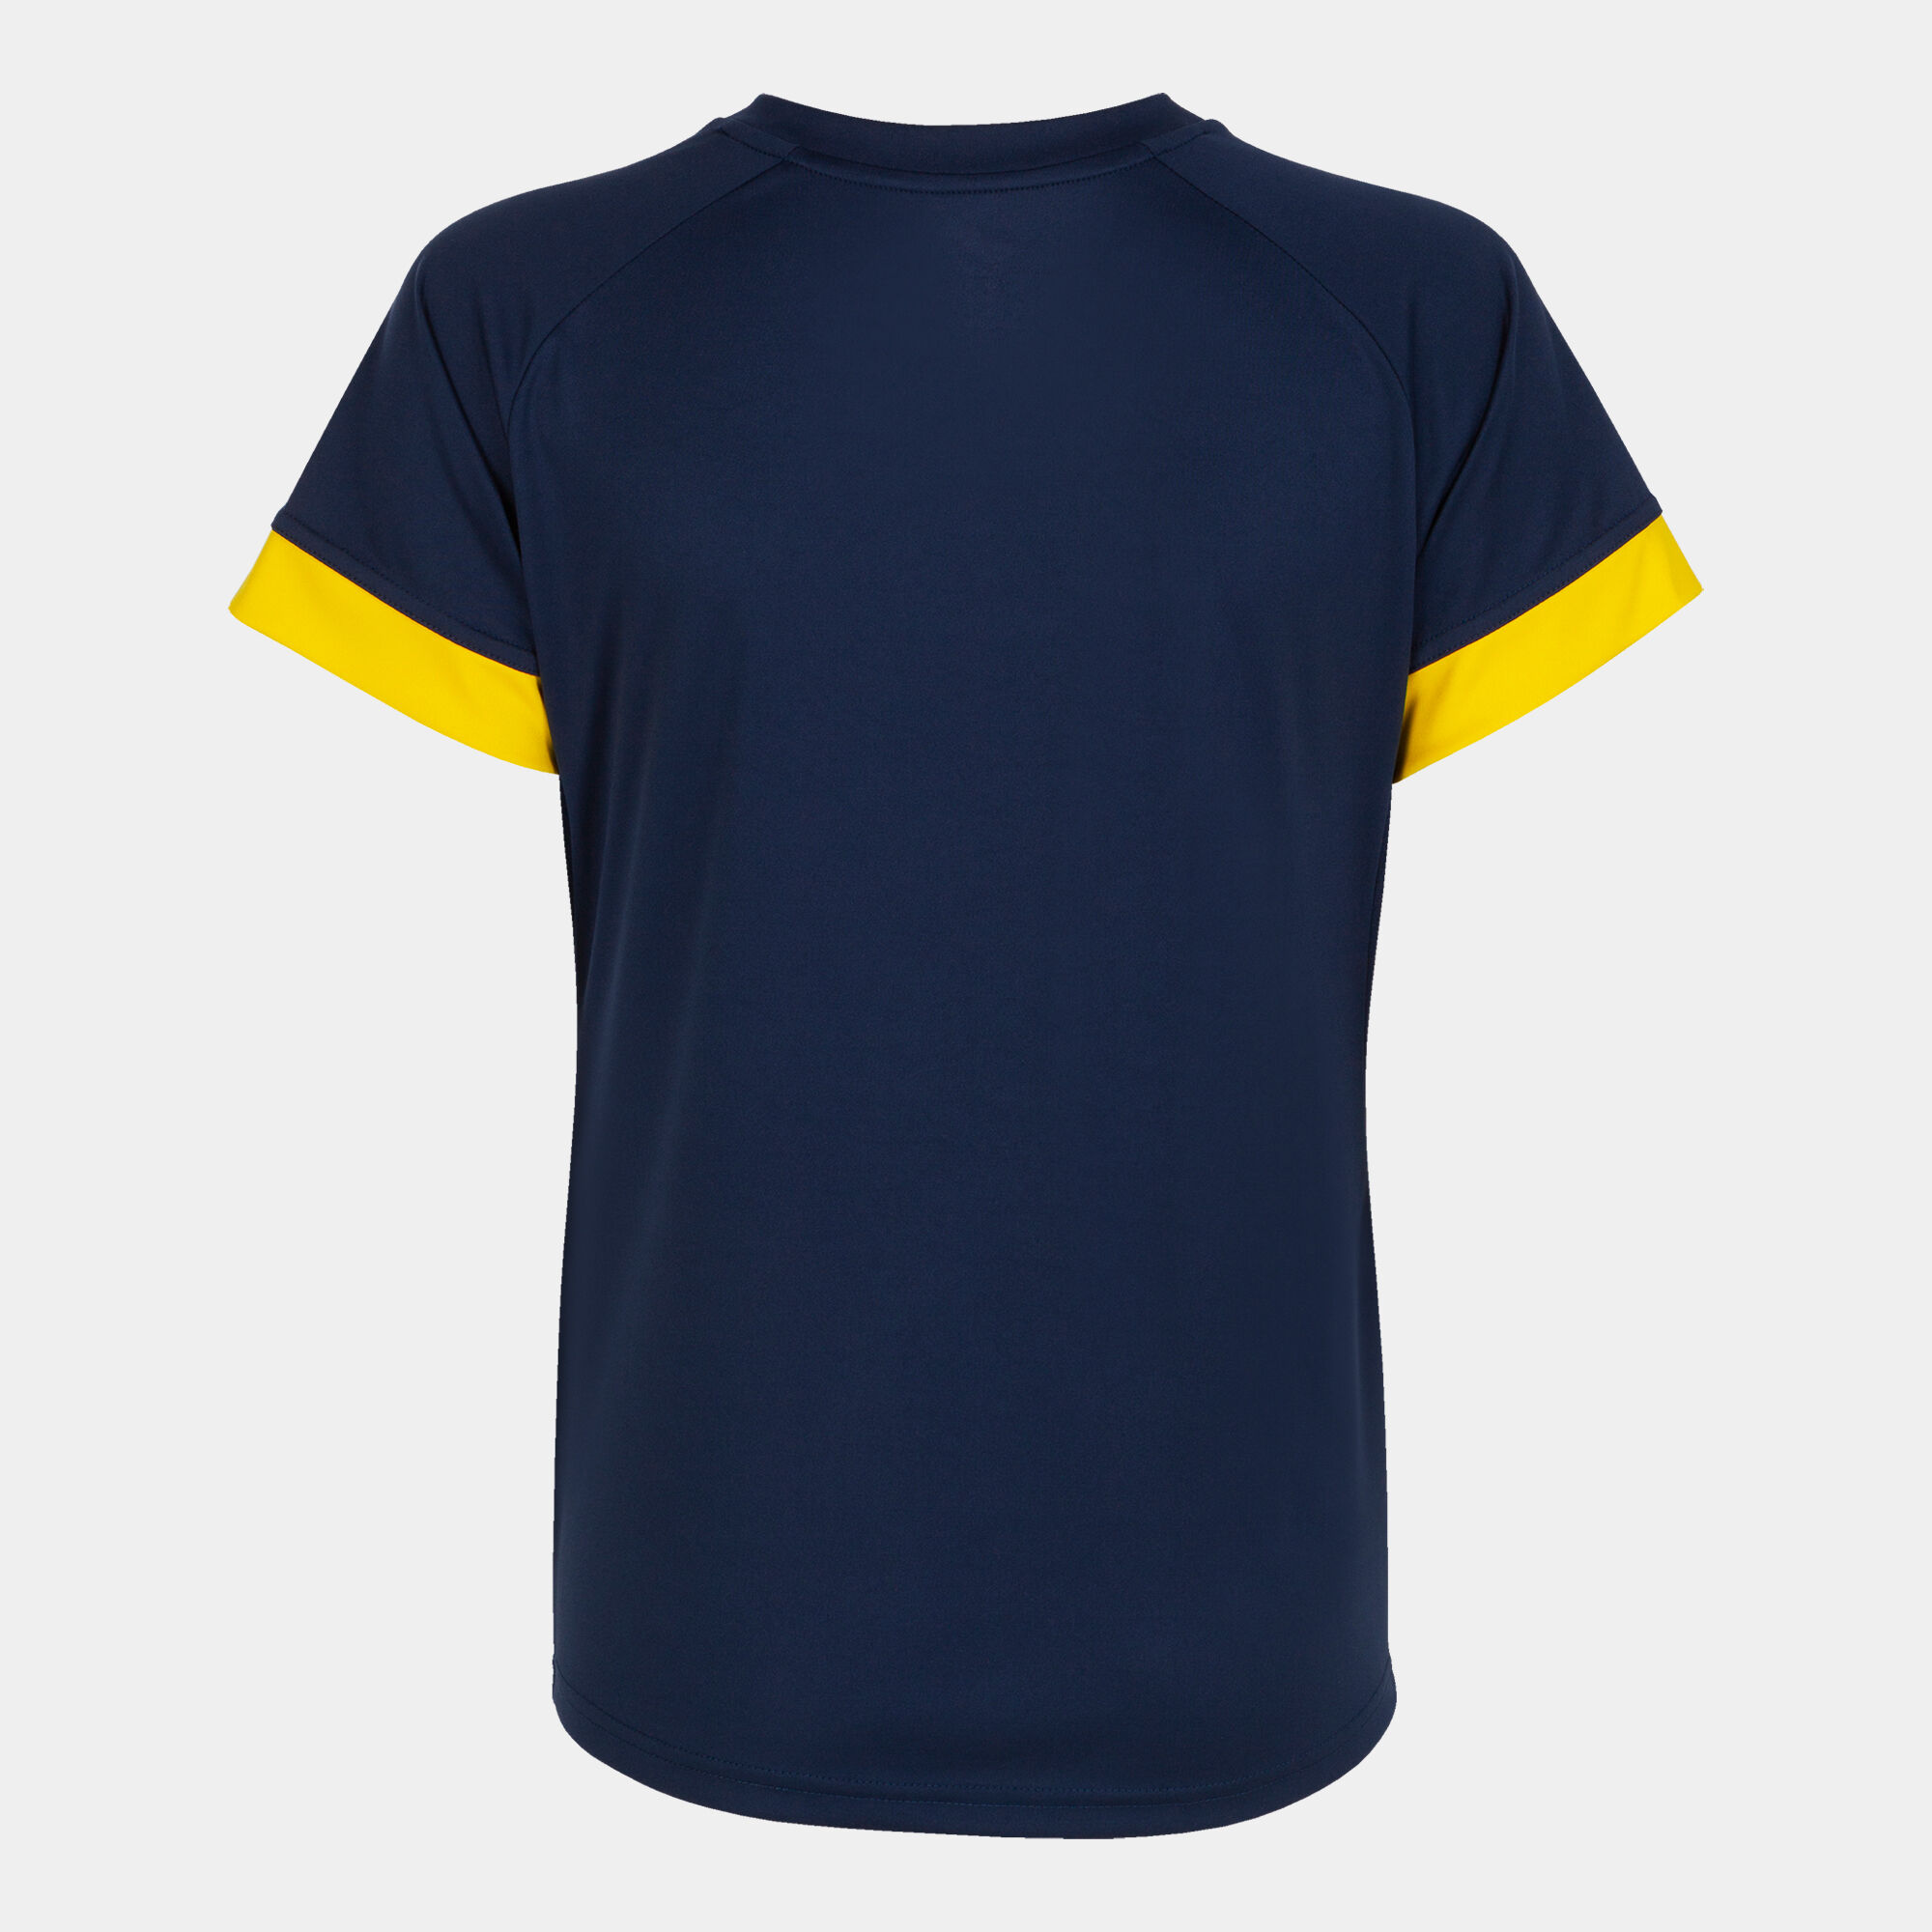 Shirt short sleeve woman Supernova III navy blue yellow